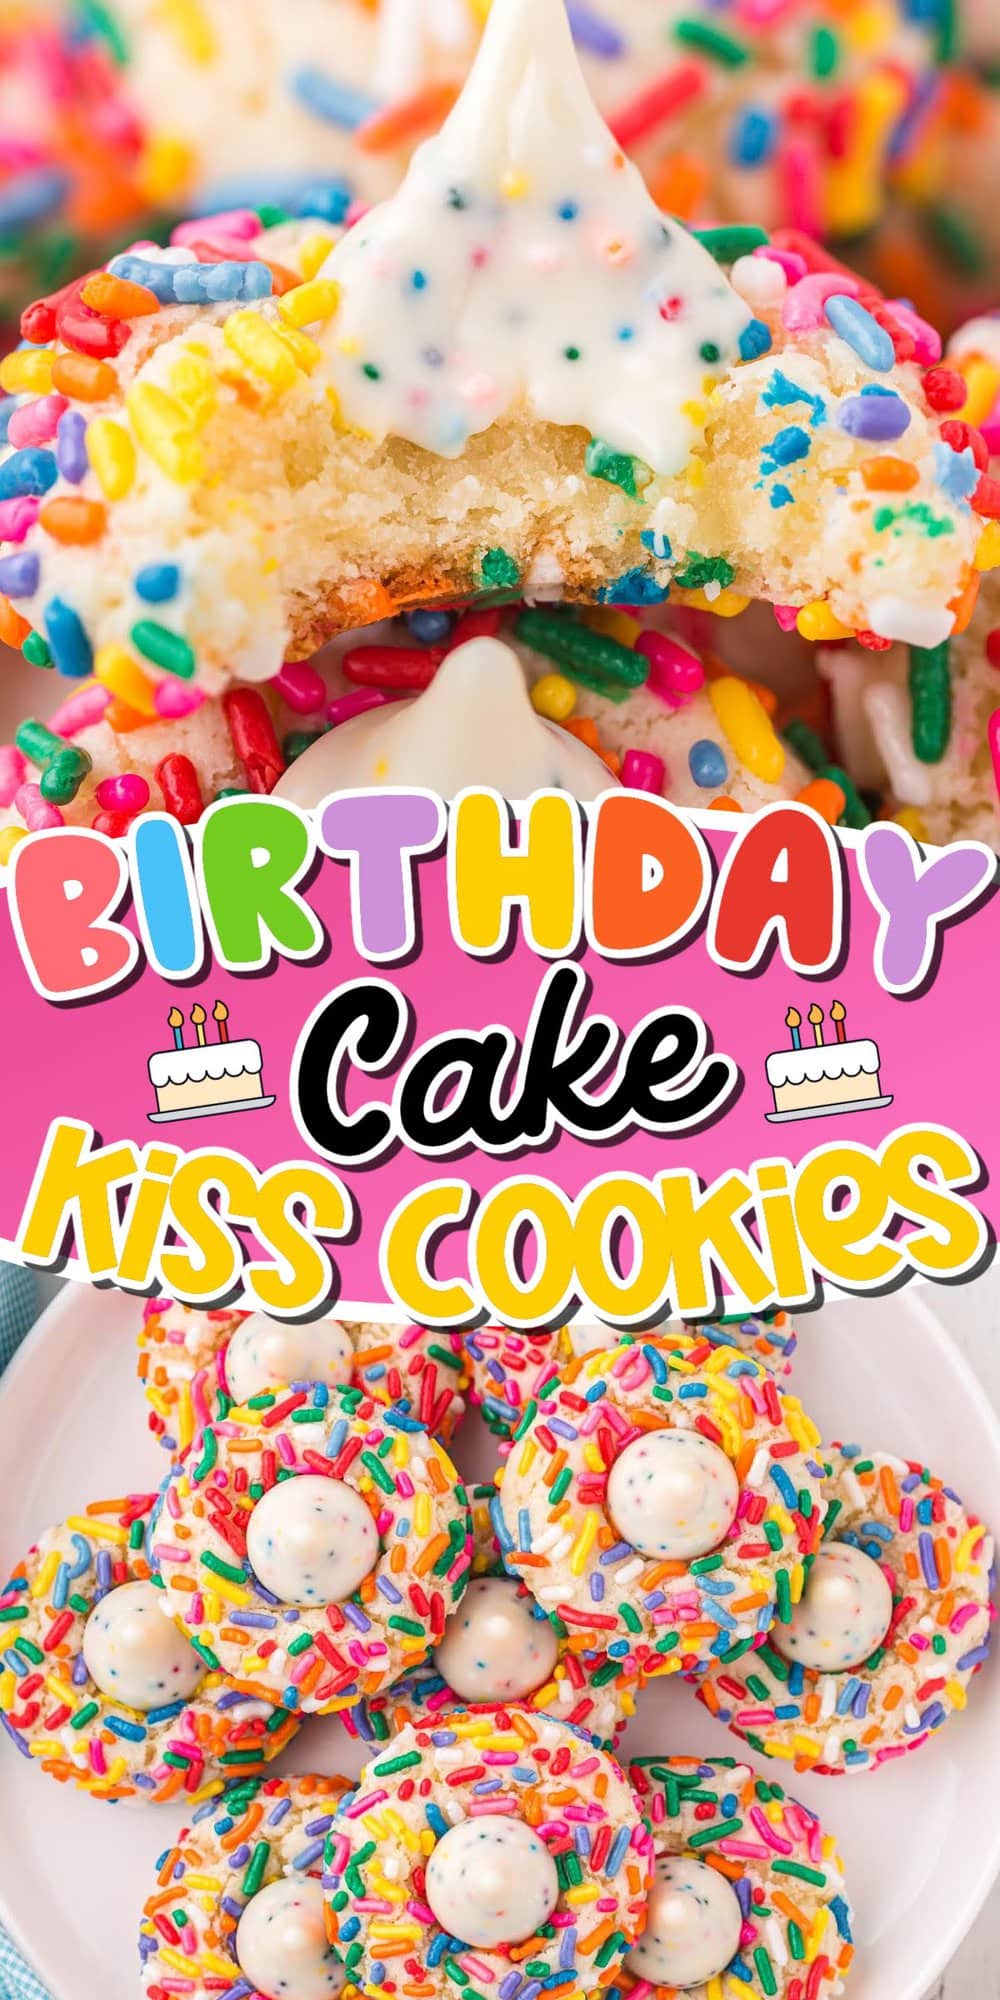 Birthday Cake Kiss Cookie pinterest